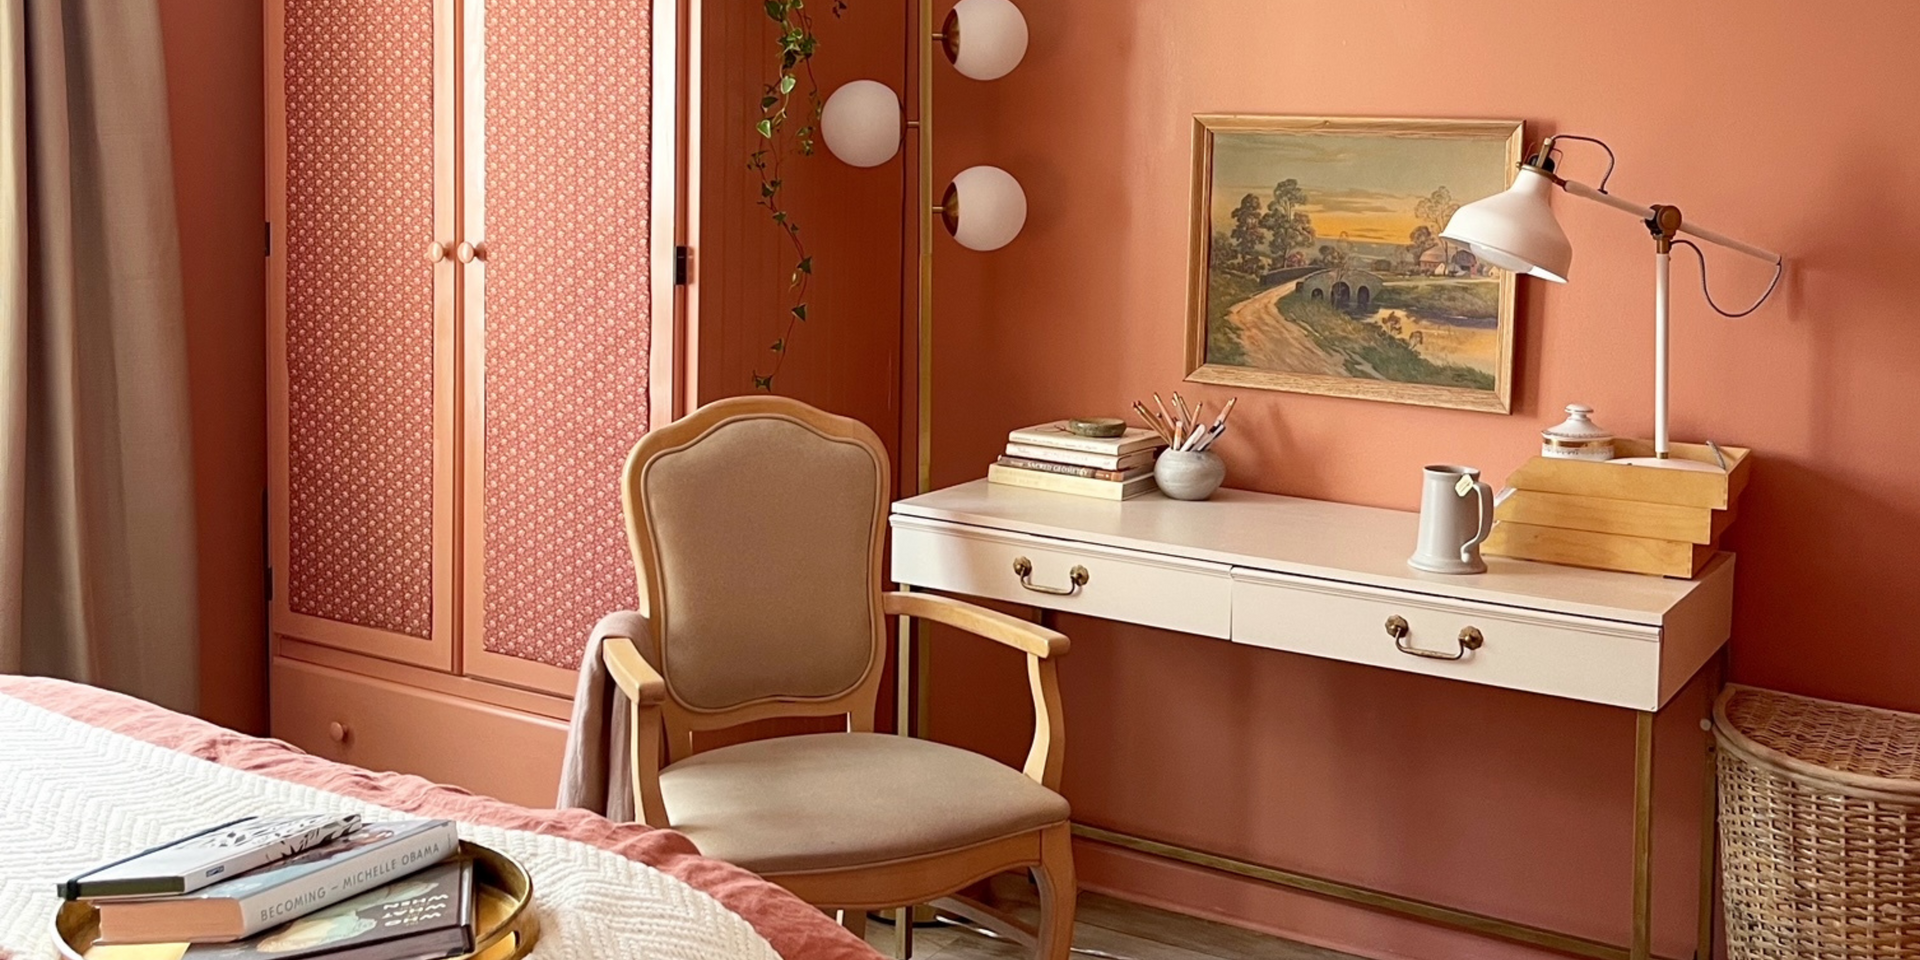 Peach colored bedroom